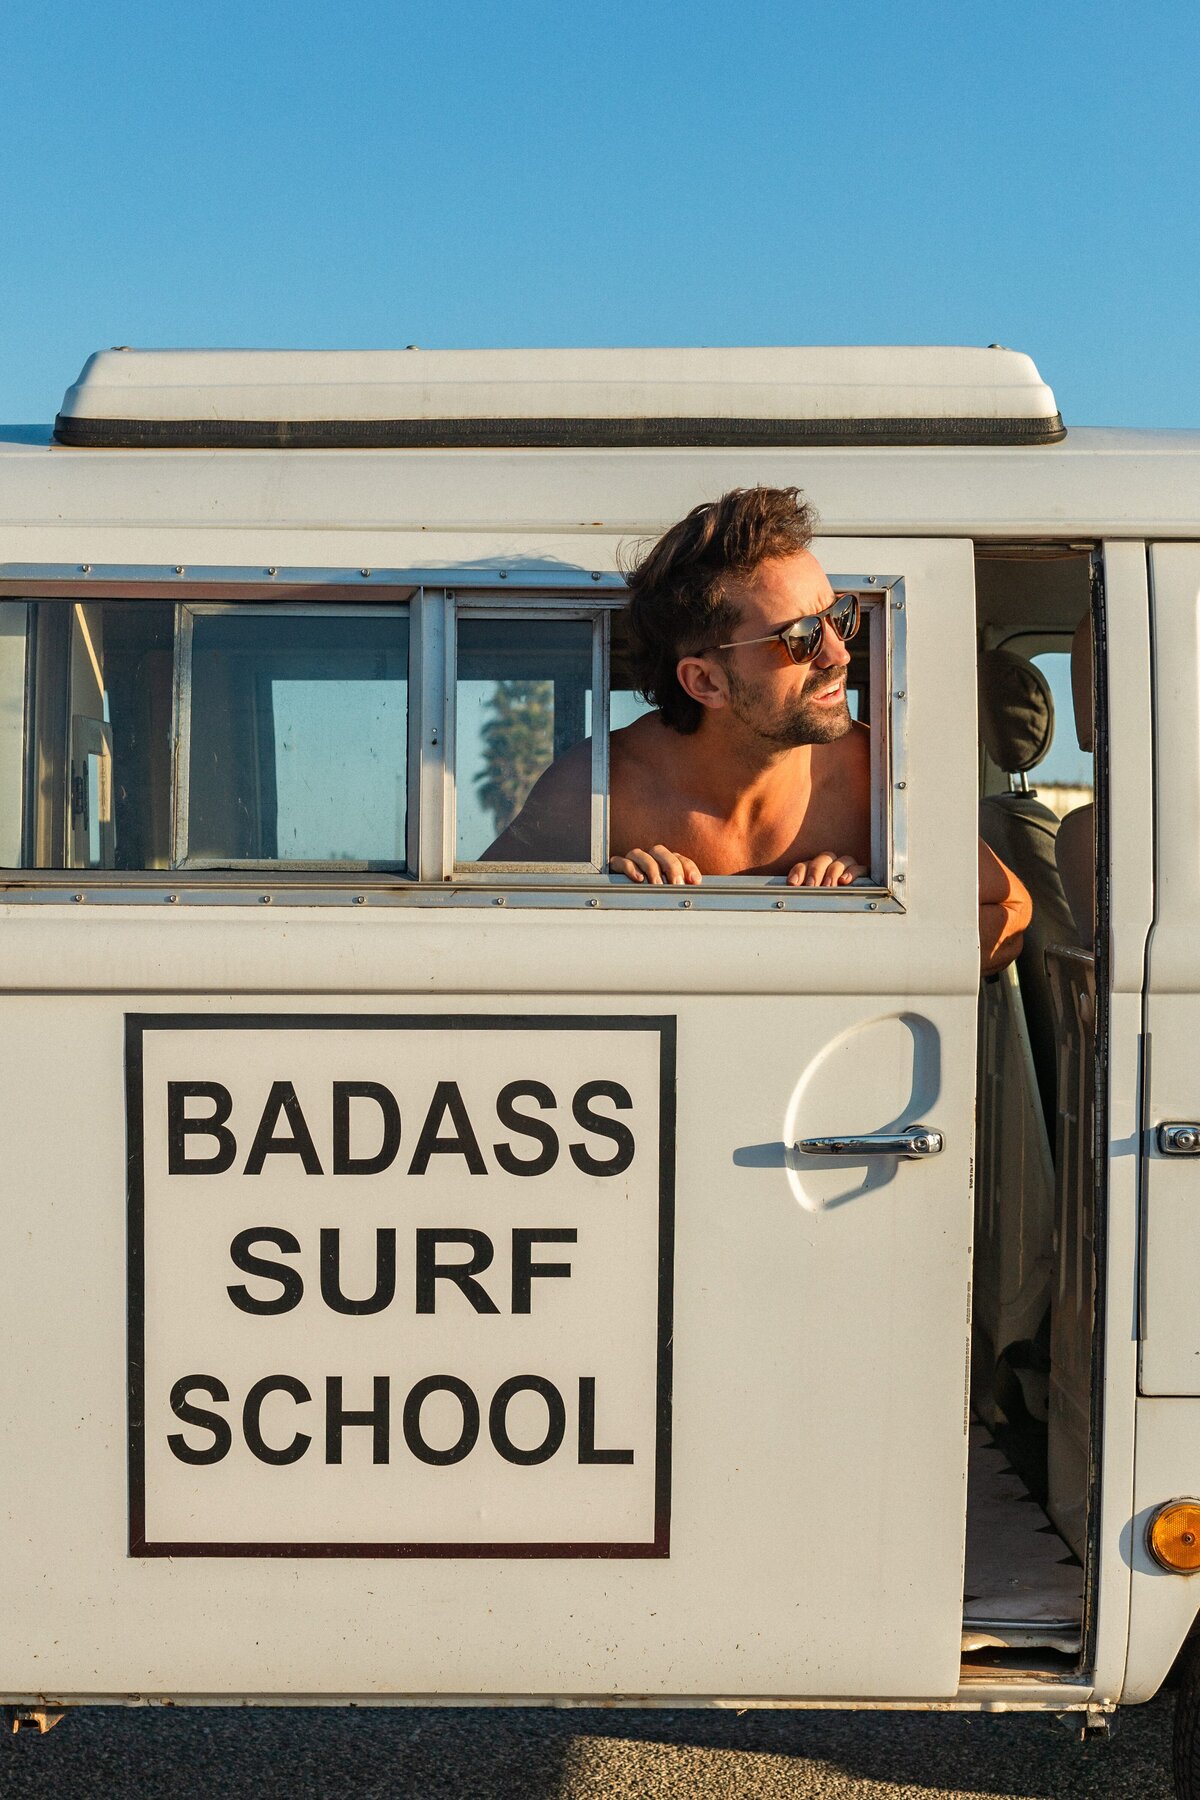 Badass-Surf-School-Venice-Beach-California-Surf-Lifestyle-Culture-047